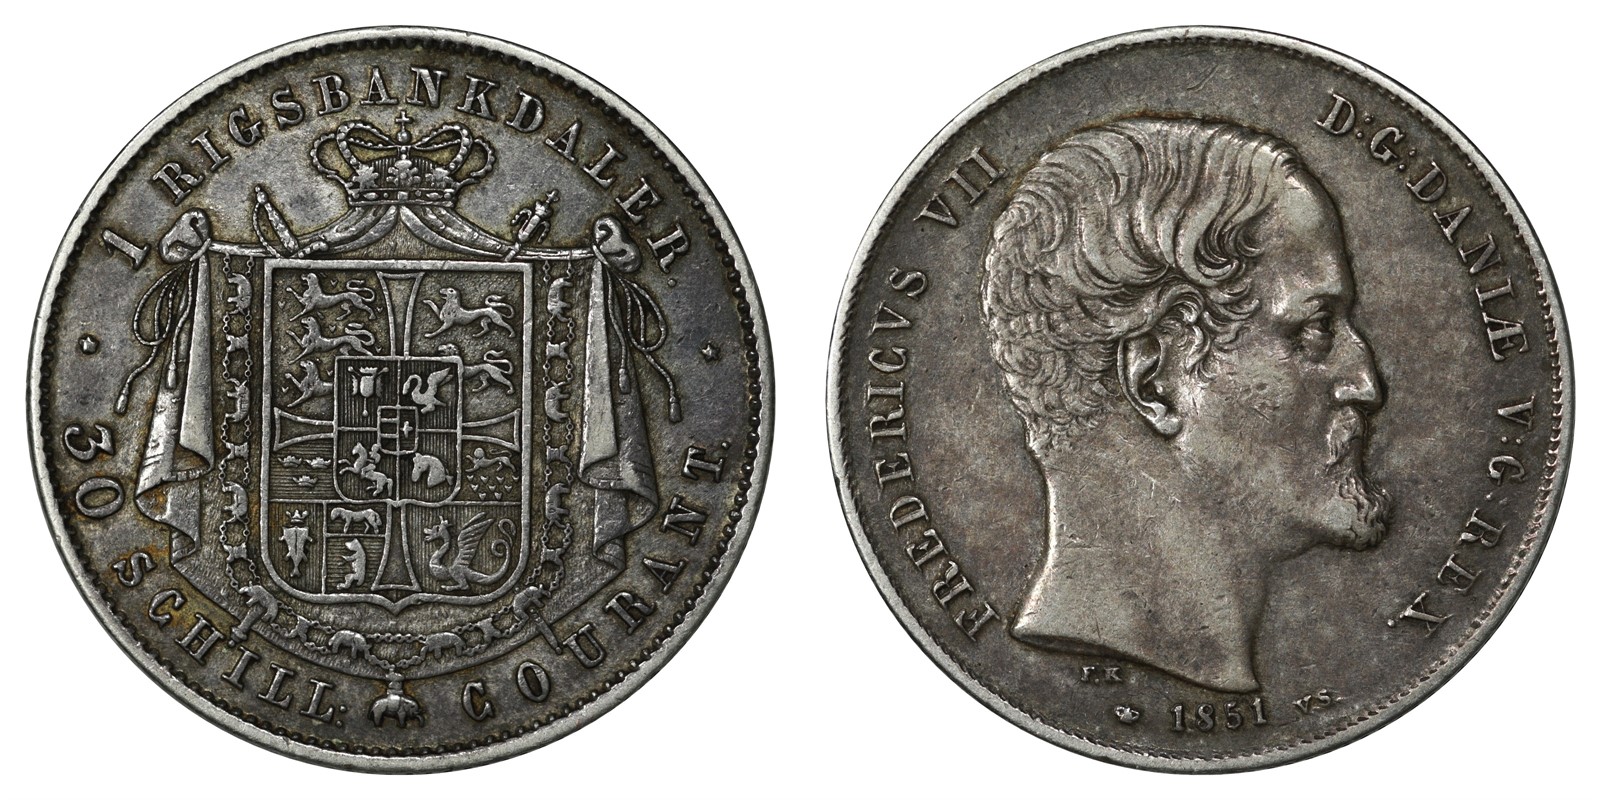 Denmark - Frederik VII - 1 Rigsbankdaler 1851 - VF *